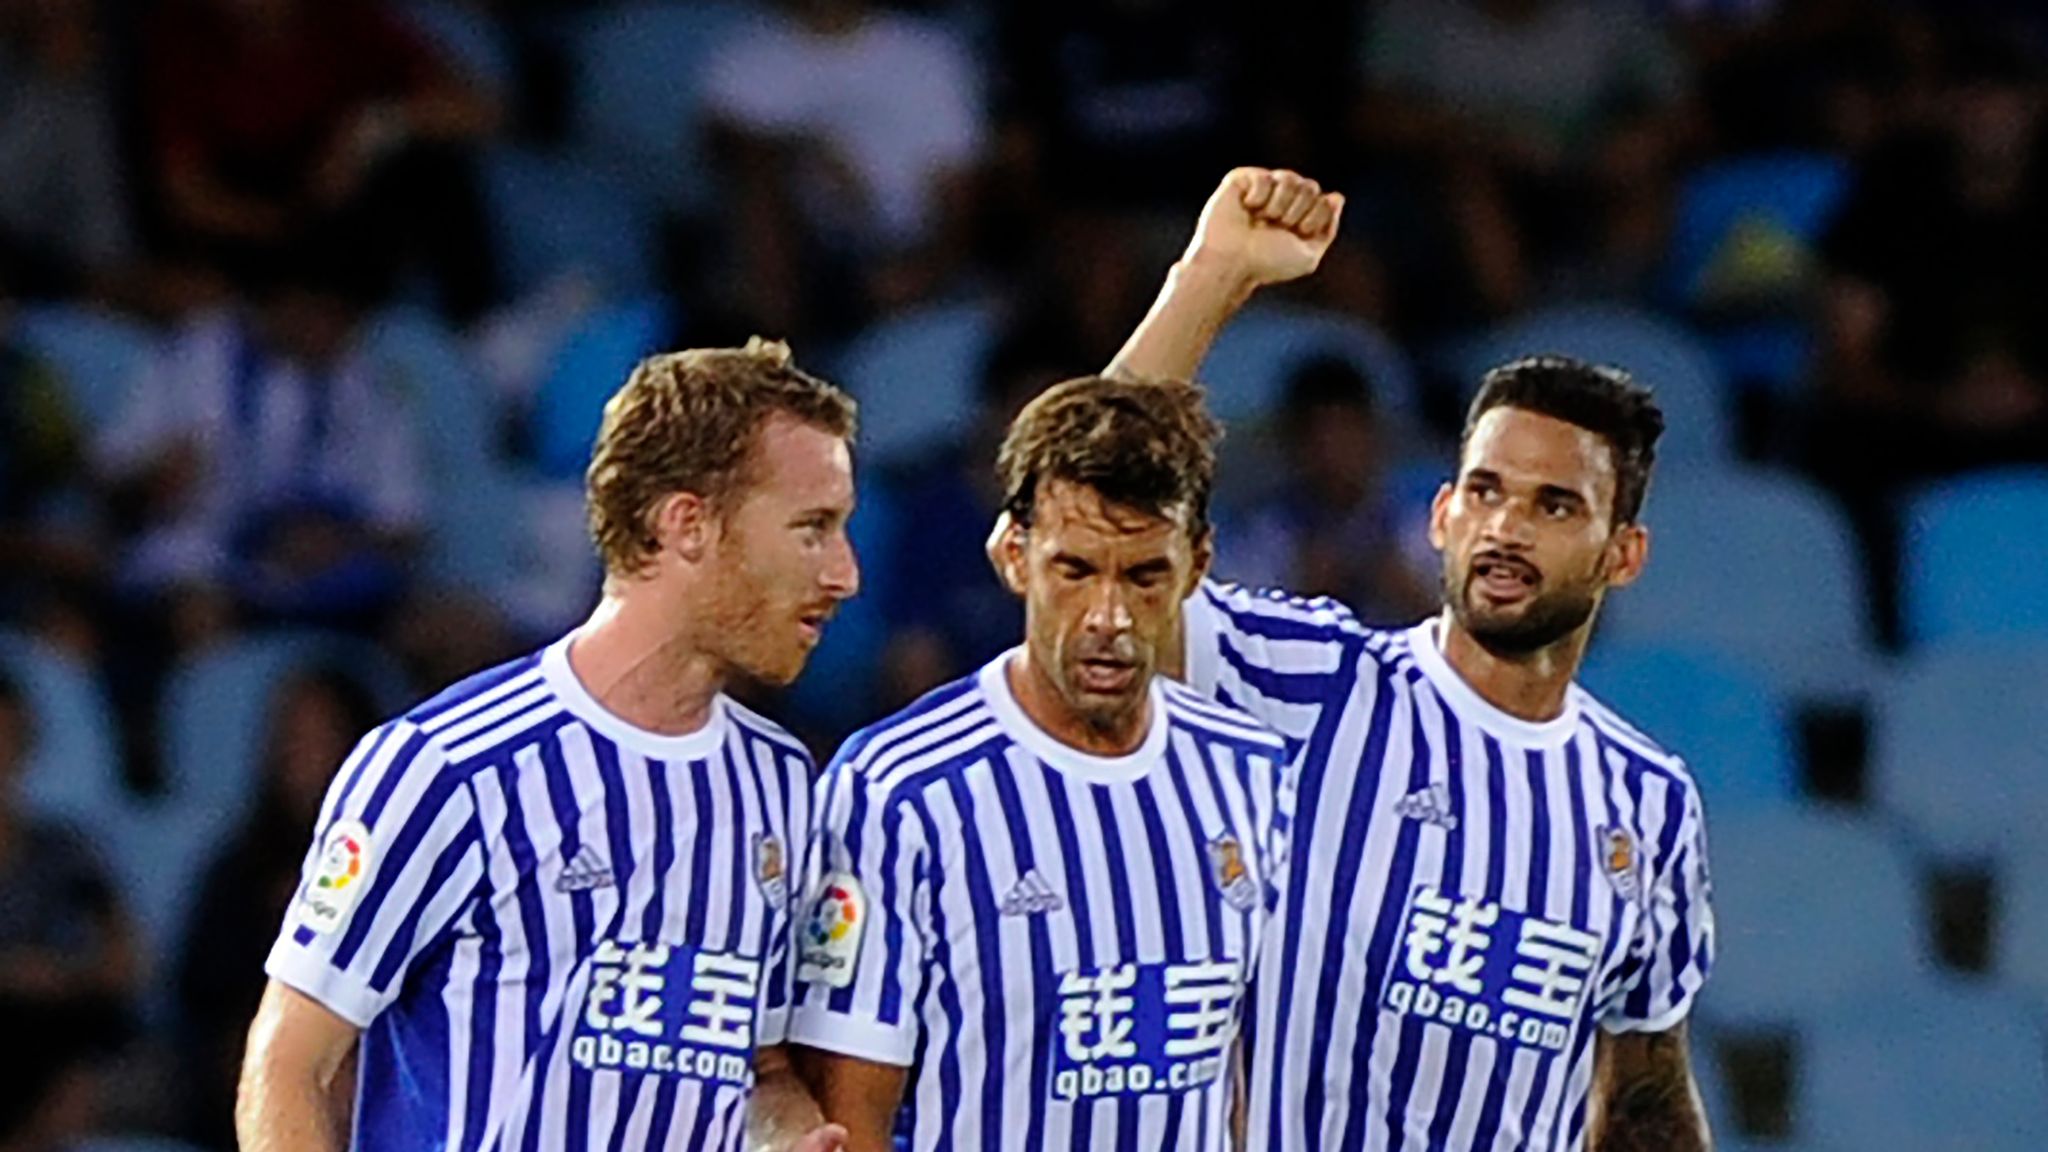 Real Sociedad 5-0 Deportivo: Hosts boost survival hopes, Football News